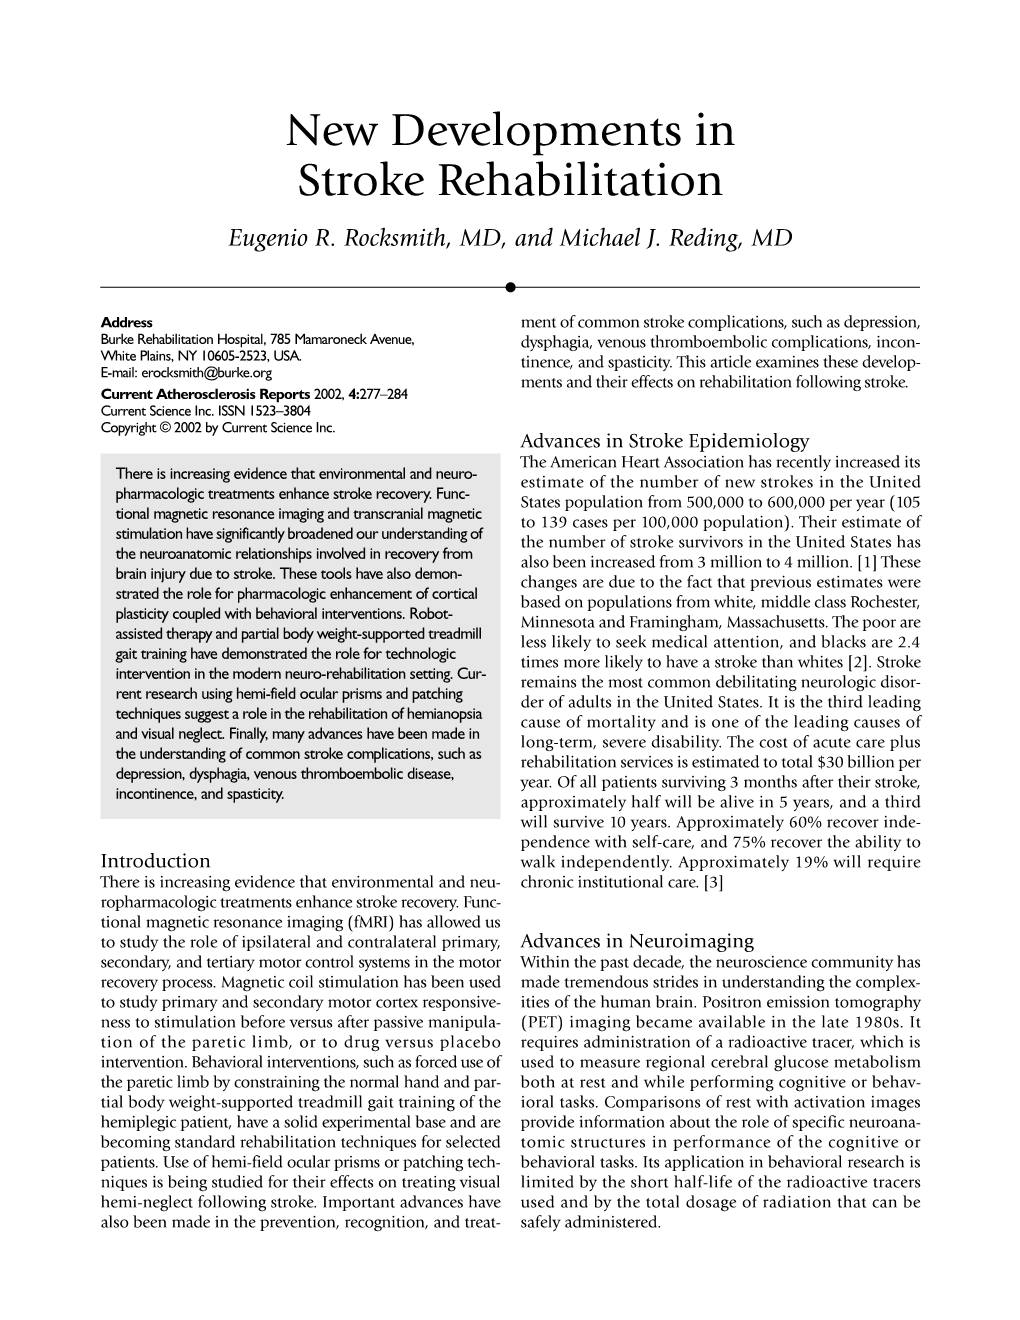 New Developments in Stroke Rehabilitation Eugenio R